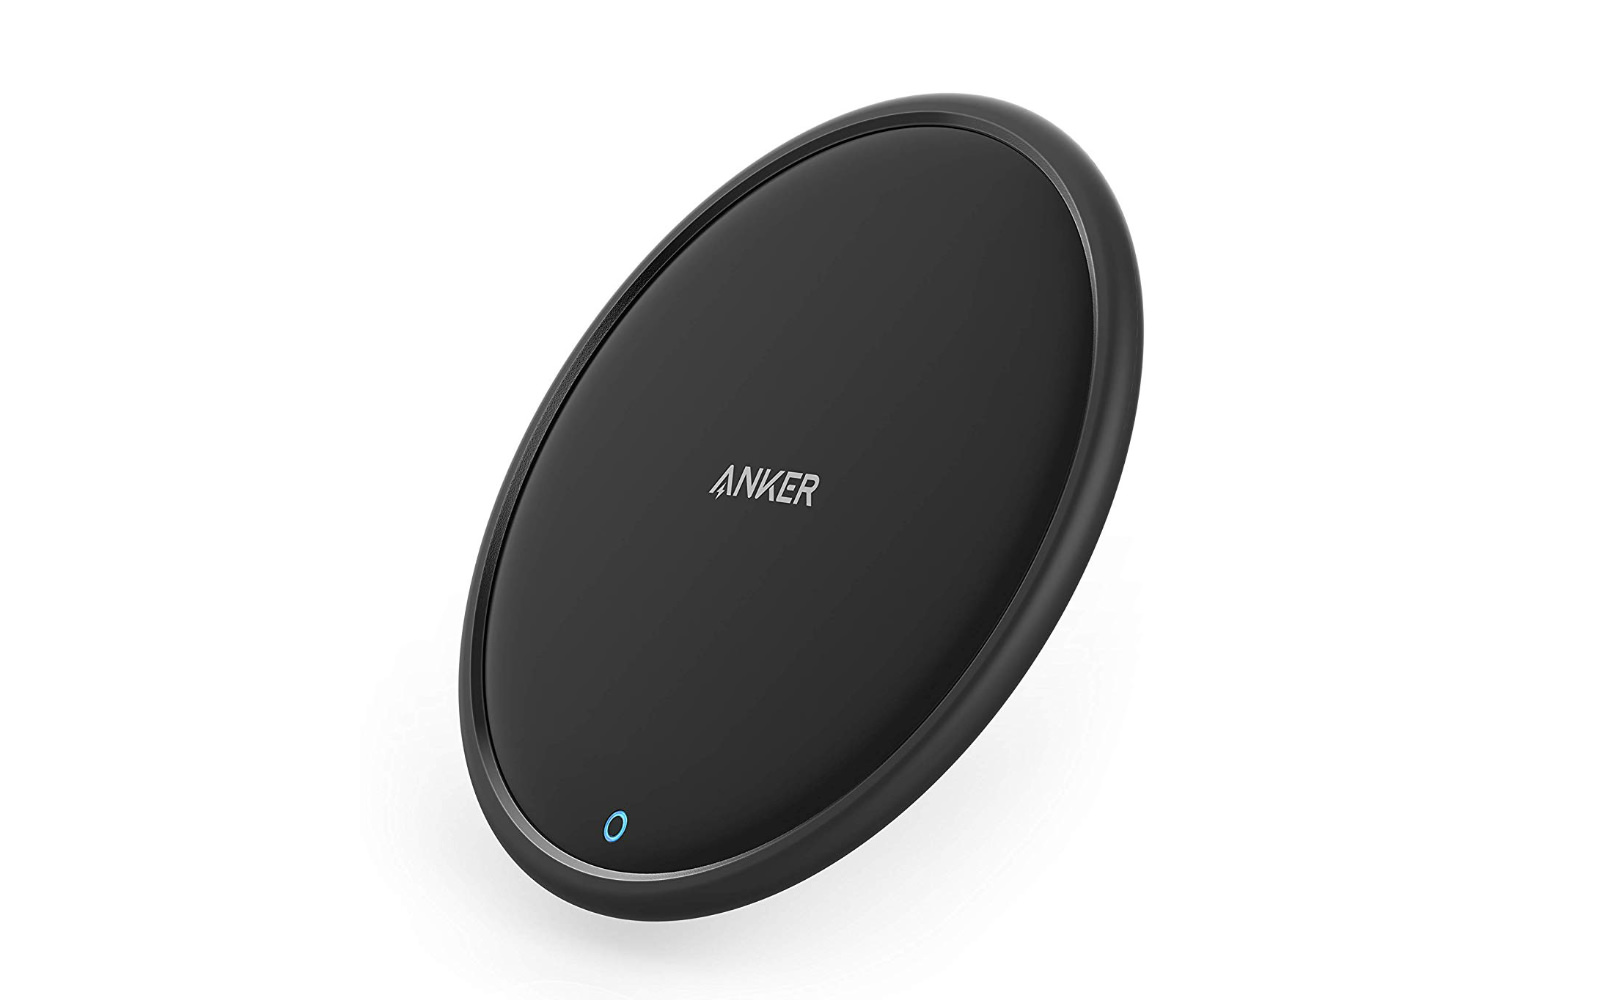 Anker-Powerwave-wireless-charger.jpg